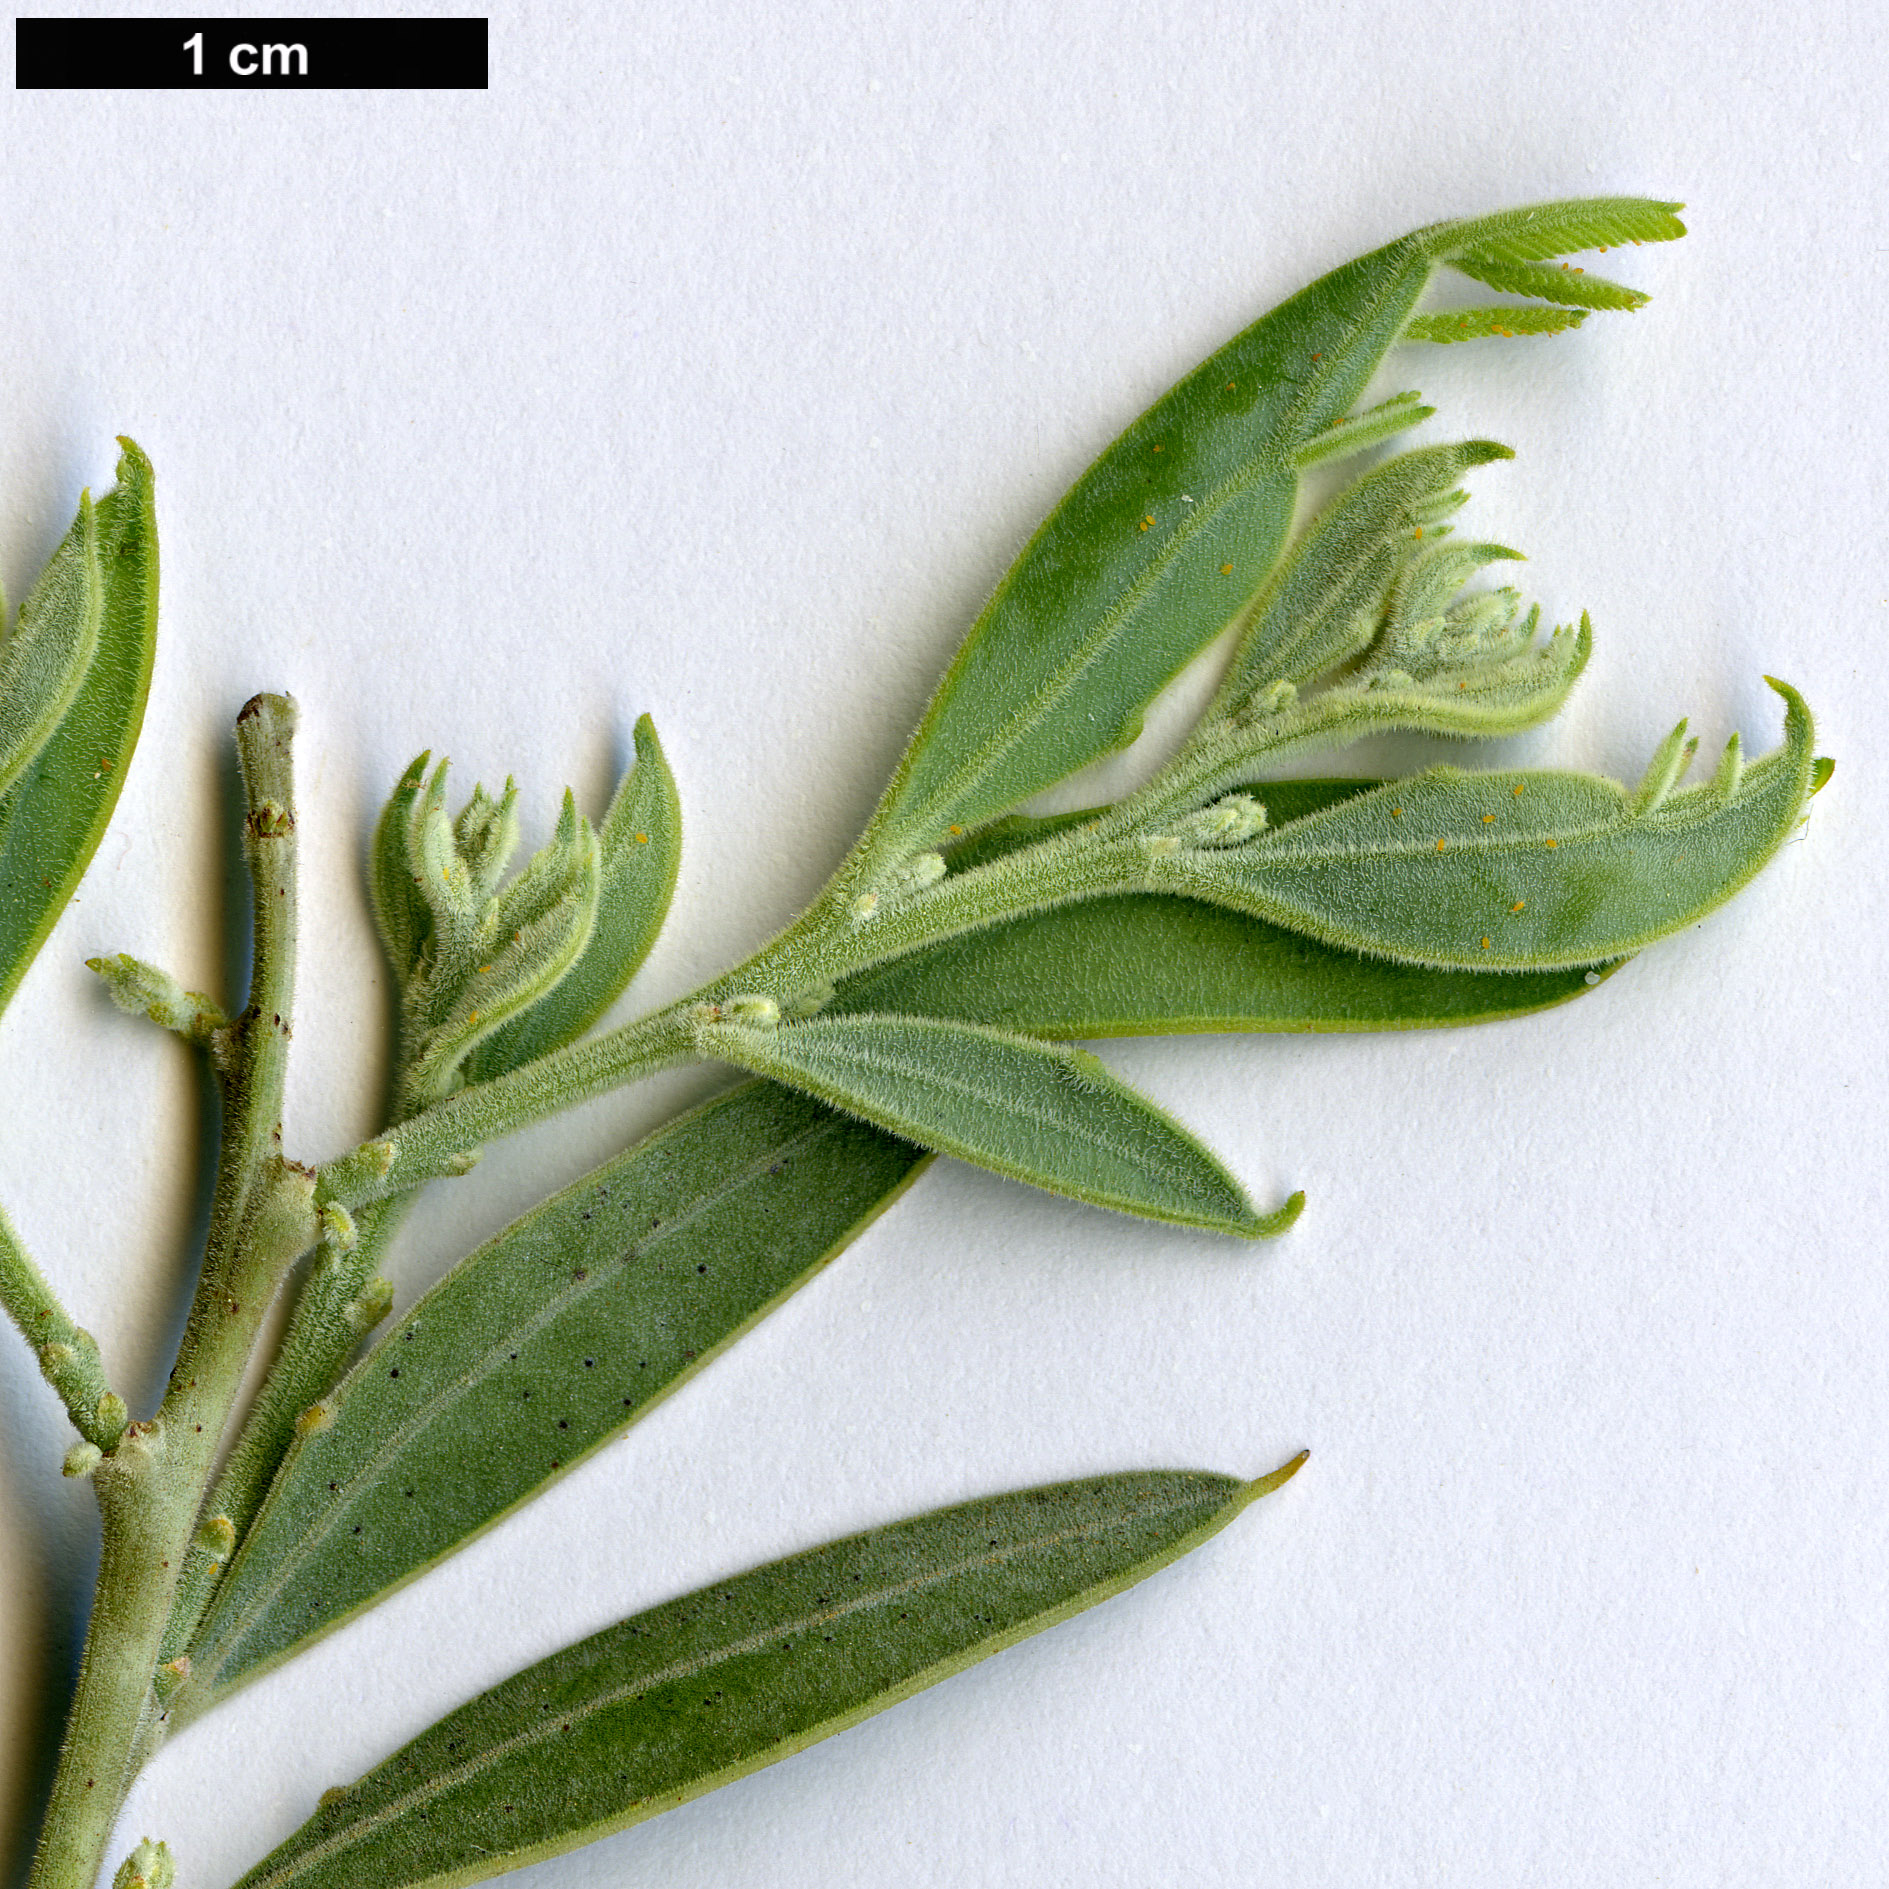 High resolution image: Family: Fabaceae - Genus: Acacia - Taxon: ×hanburyana (A.dealbata × A.podalyriifolia)